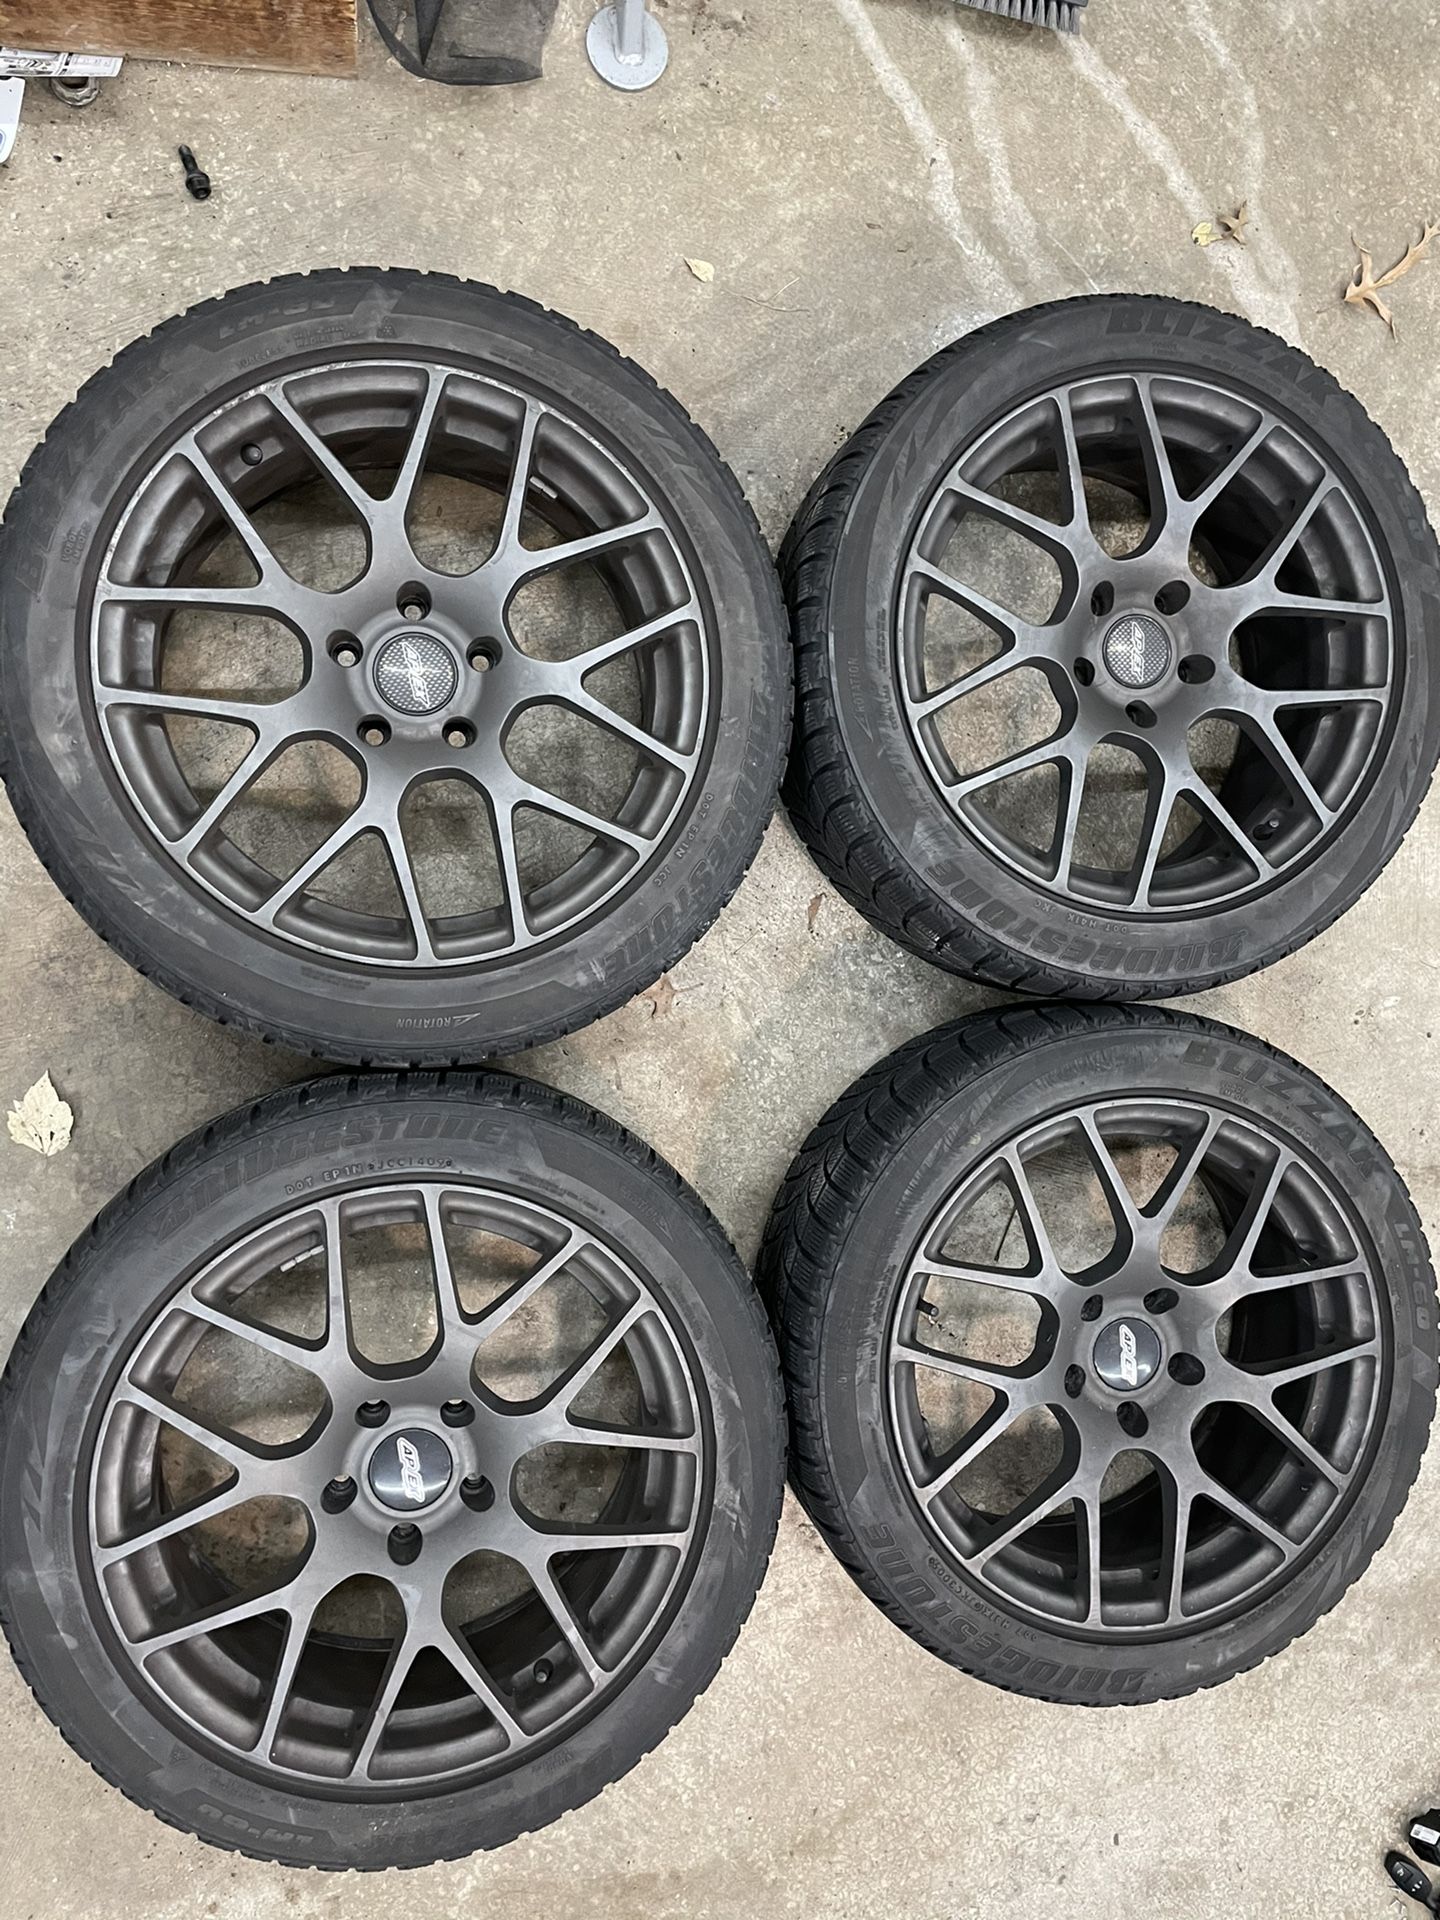 BMW TSW wheels with Blizzak snow winter tires